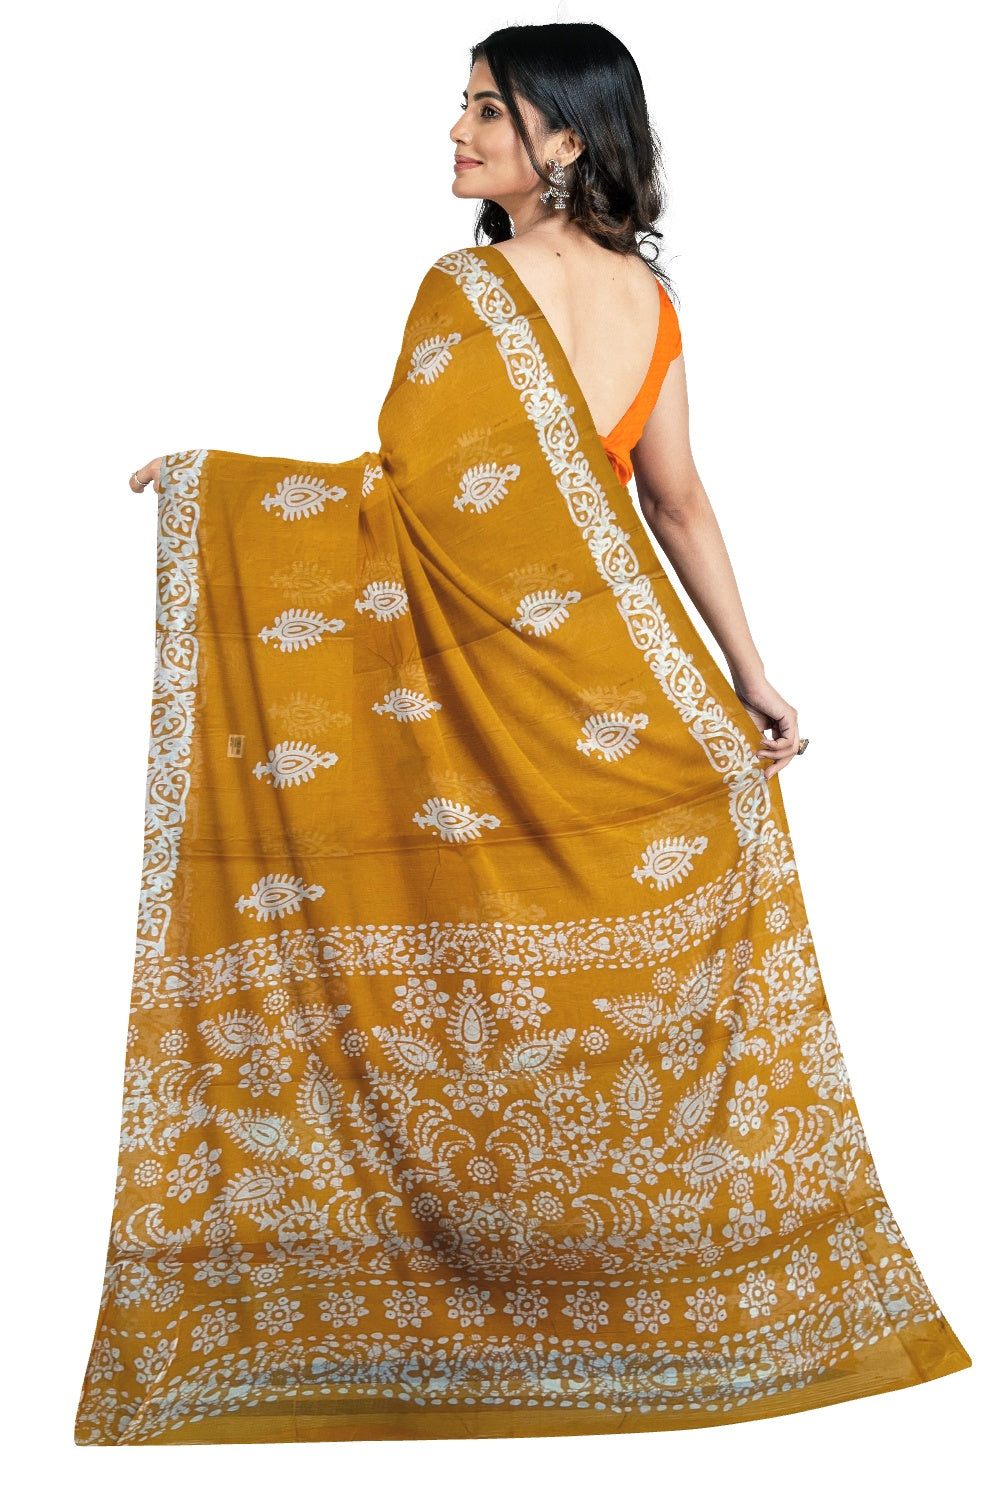 Southloom Orange Cotton Saree with Printed Design